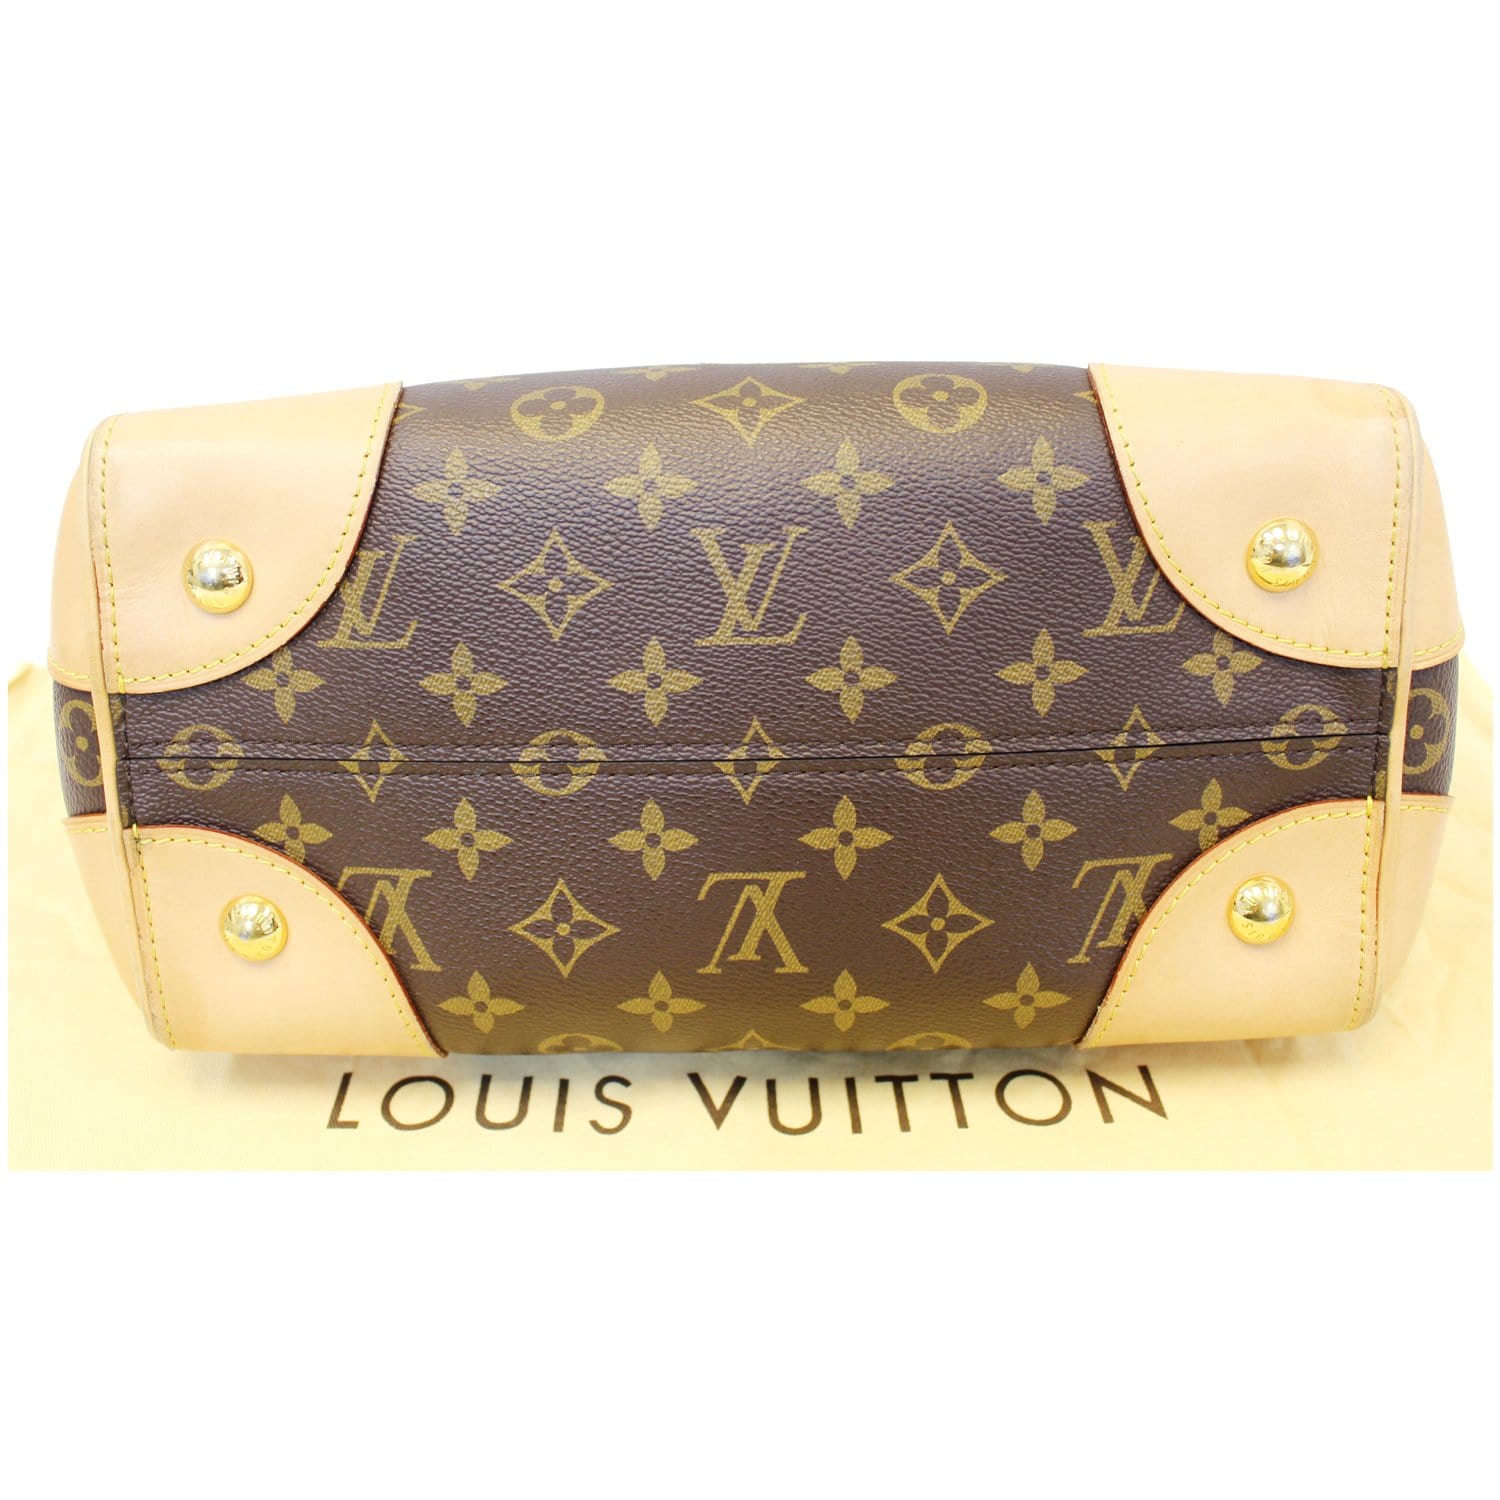 Louis Vuitton Phenix Monogram MM Brown/Black - US